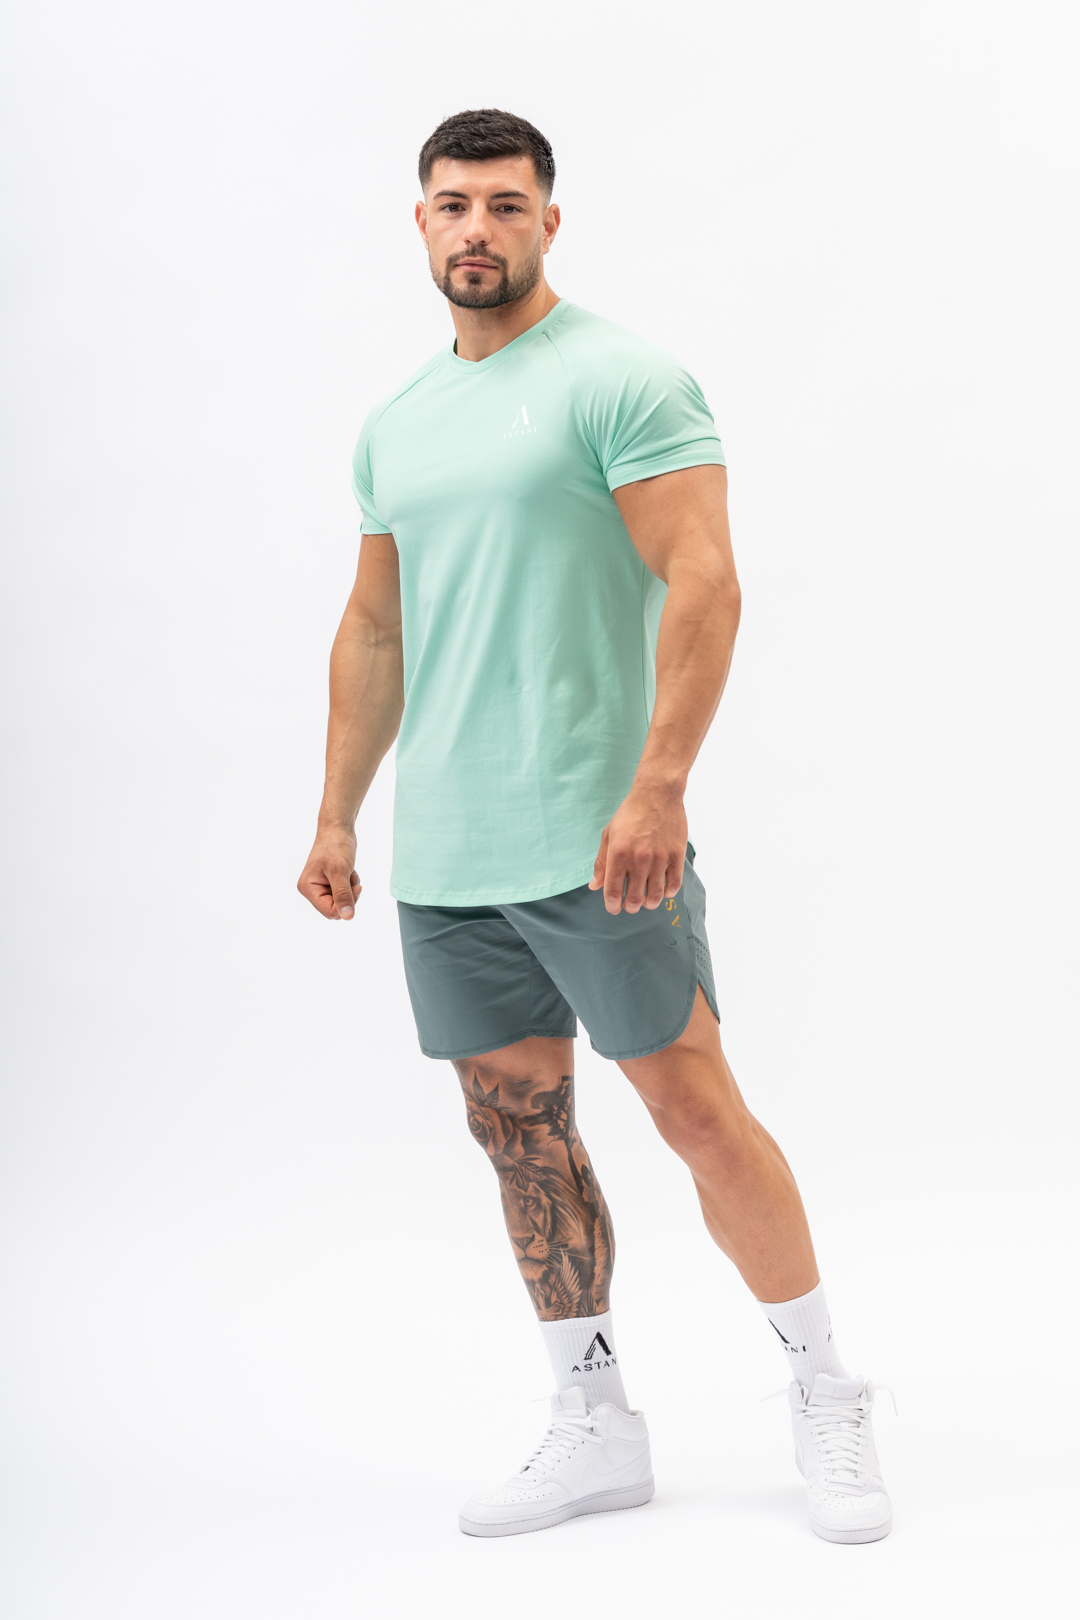 Code Mint Cotton Stretch Workout Gym Lifestyle T-Shirt